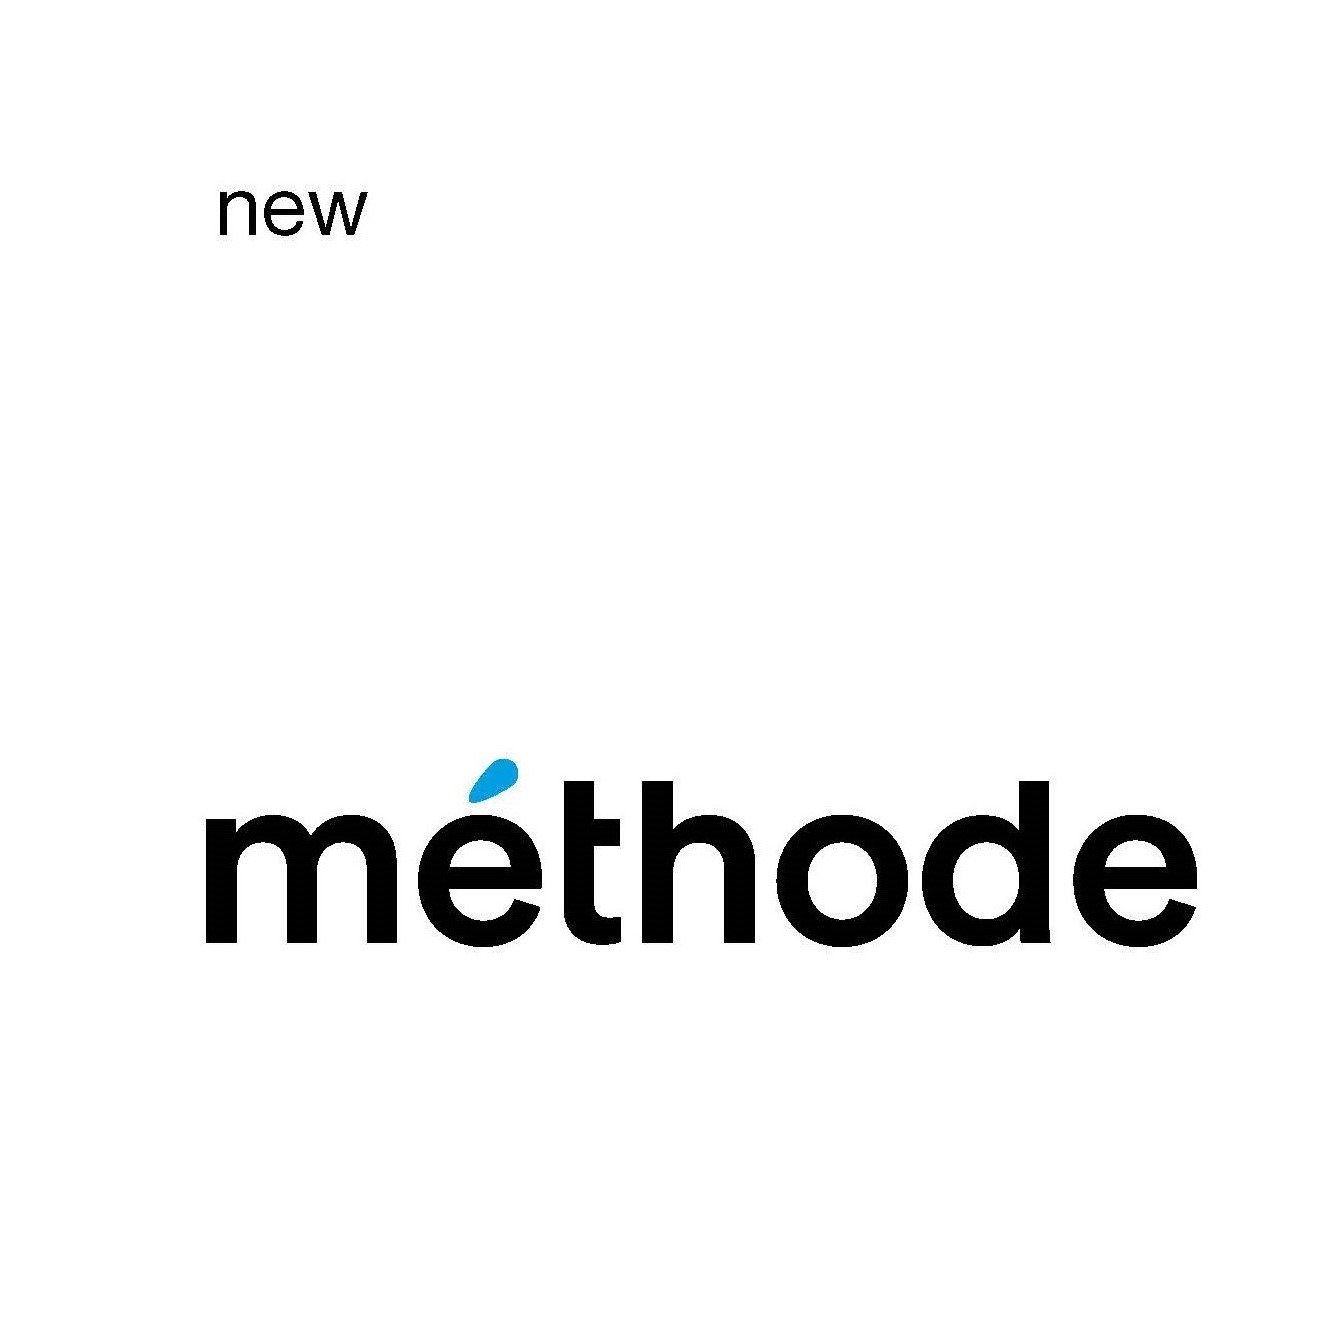 La metamorfosi di Méthode: una nuova brand identity